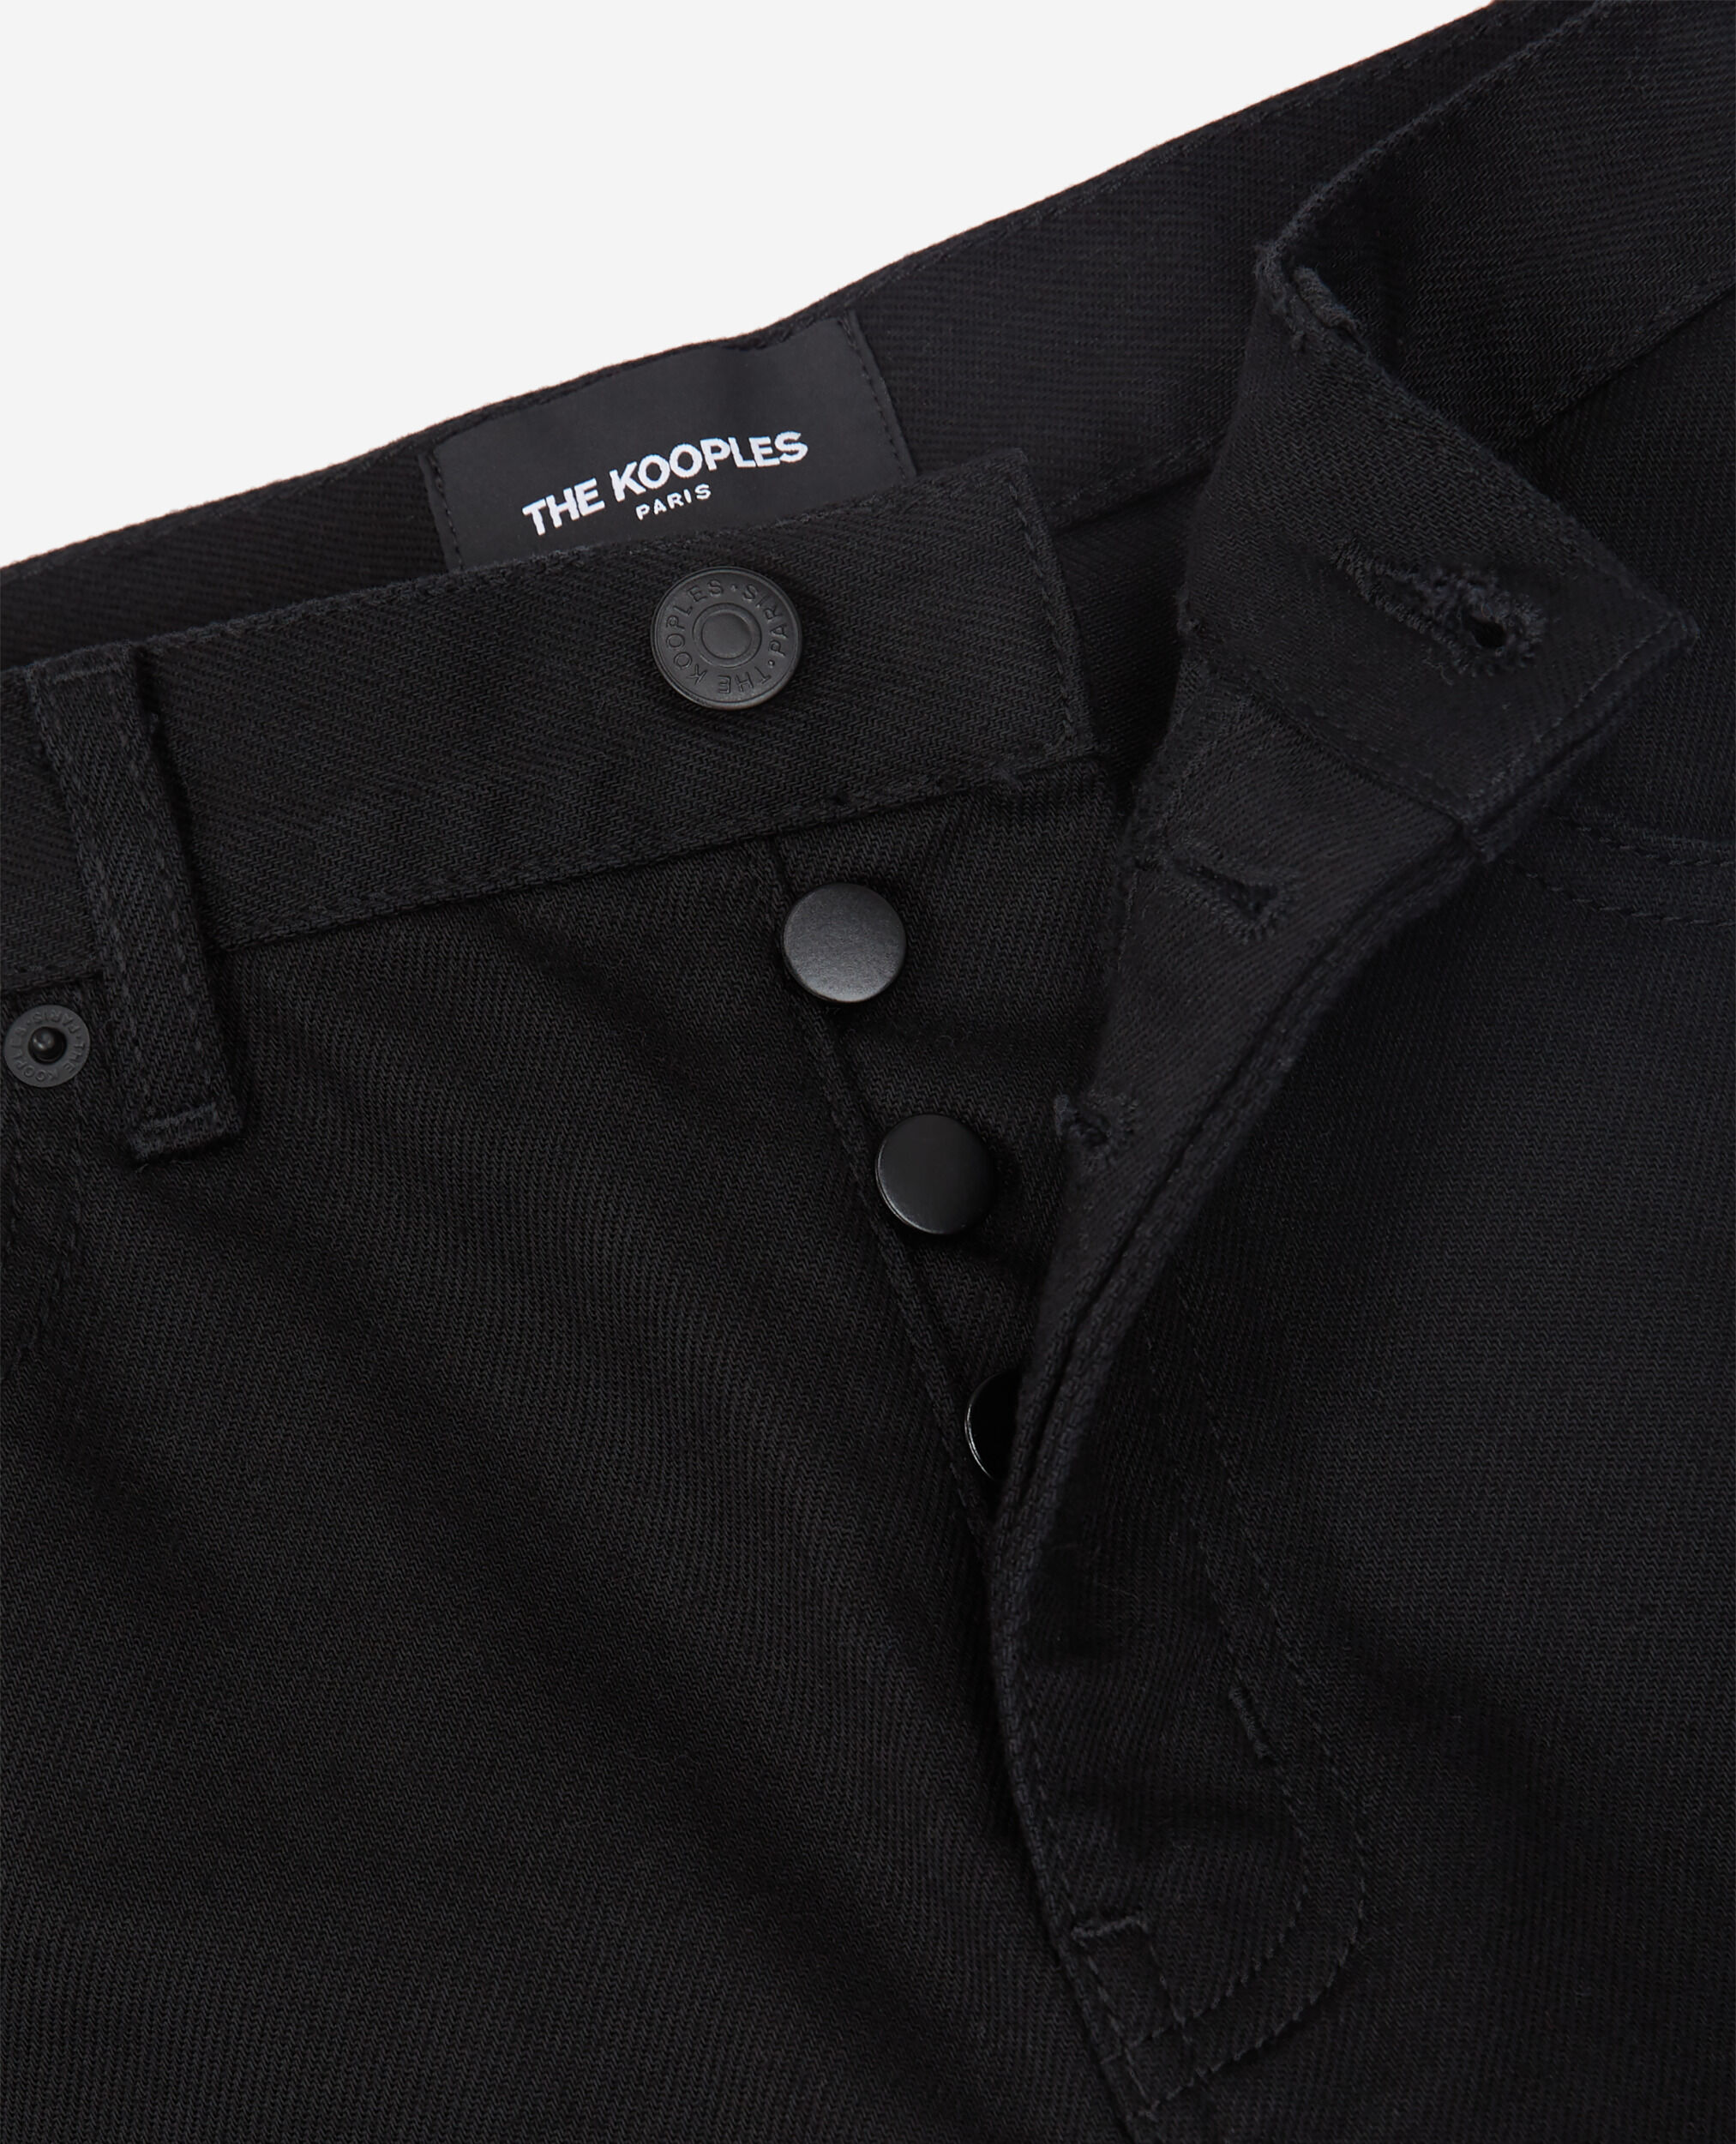 Black straight-cut jeans, BLACK, hi-res image number null